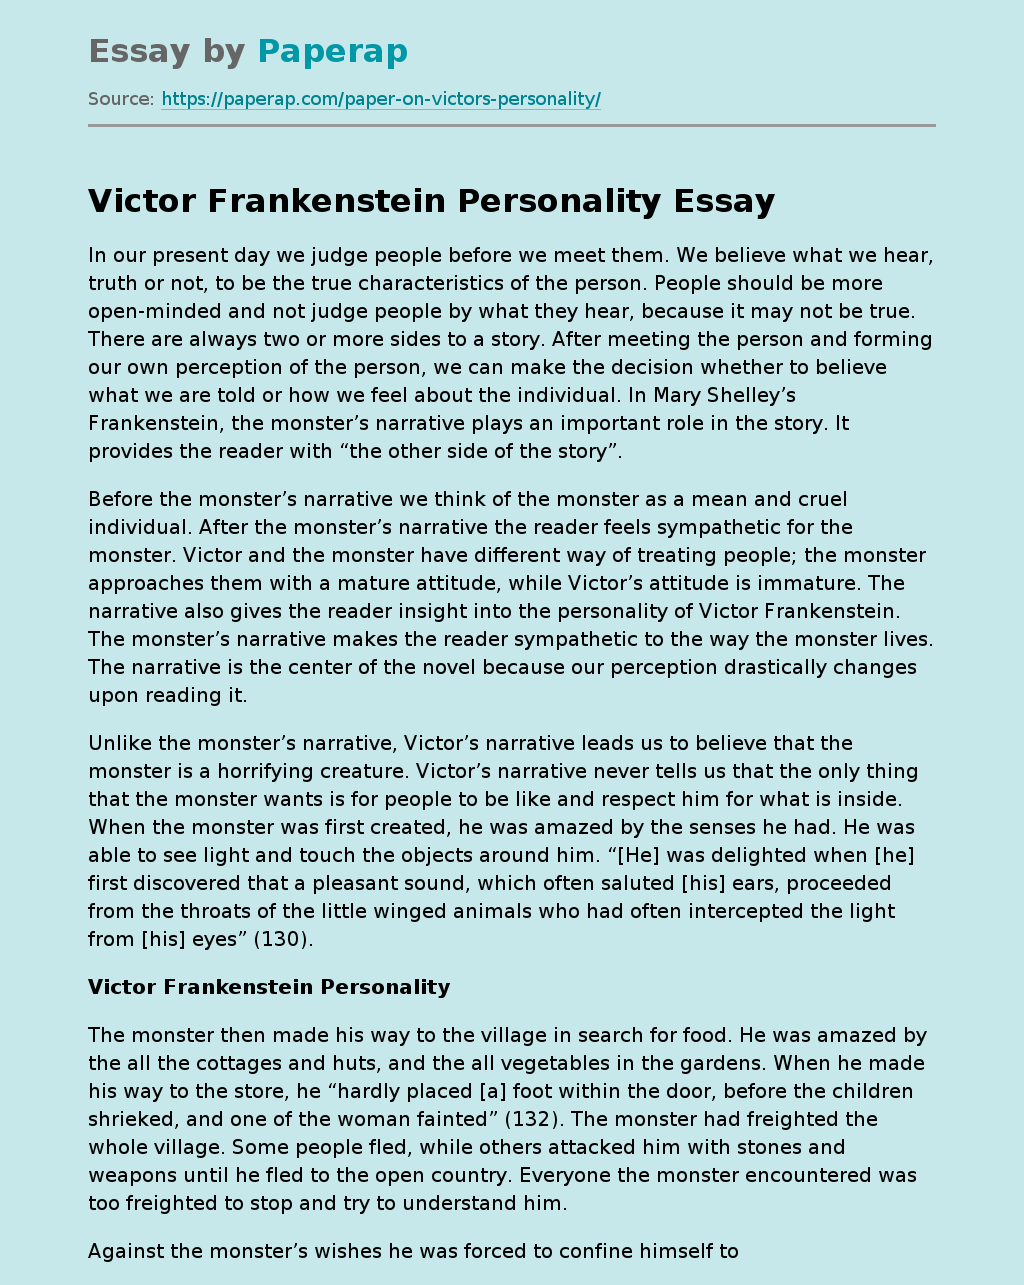 Victor Frankenstein Personality